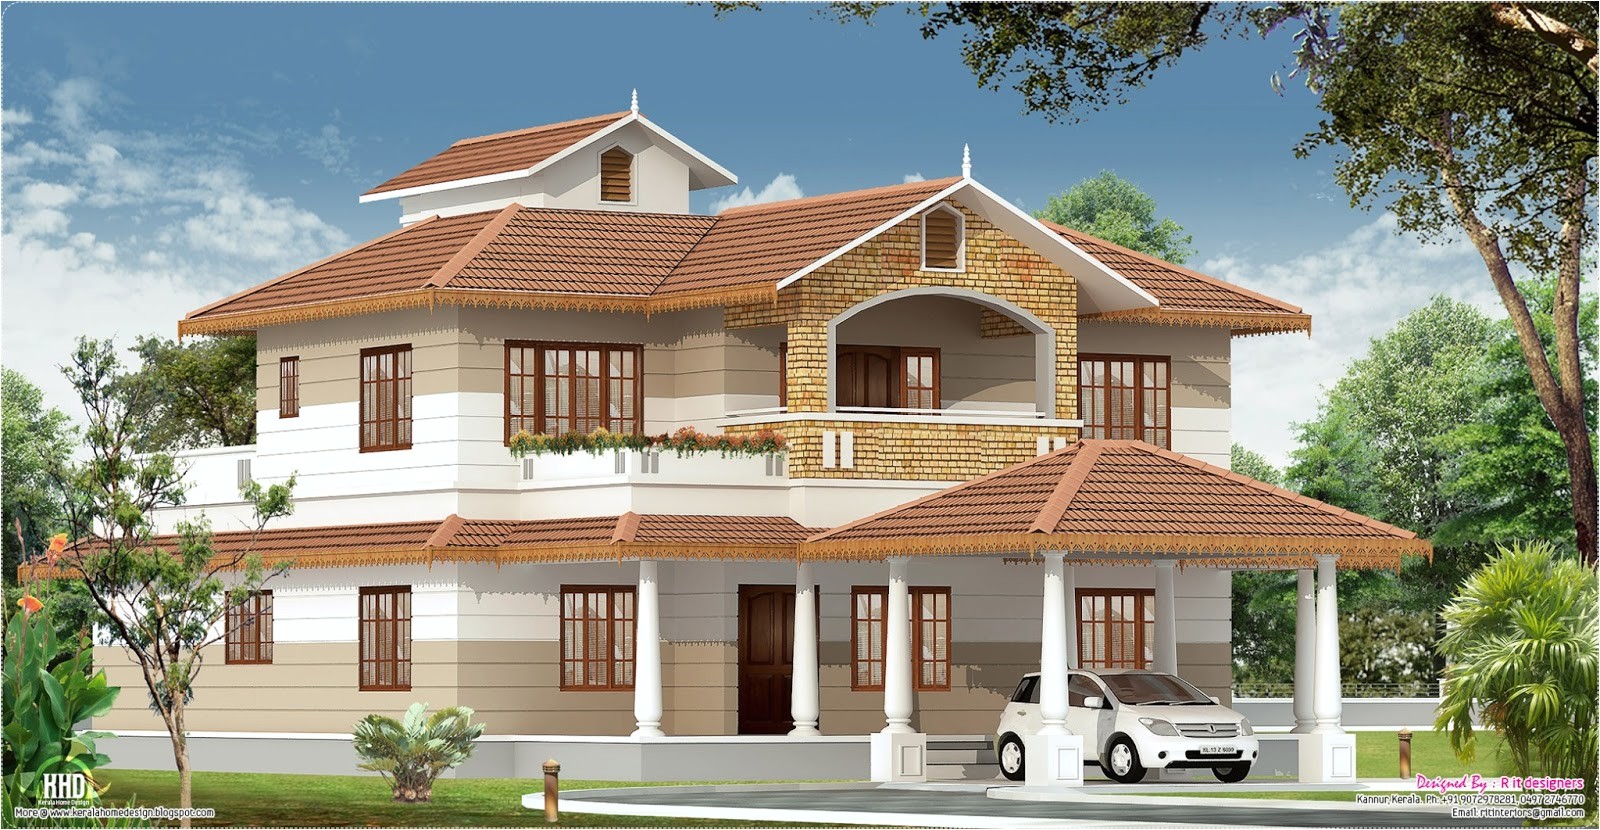 Home Plans Design Kerala 2700 Sq Feet Kerala Home with Interior Designs Kerala